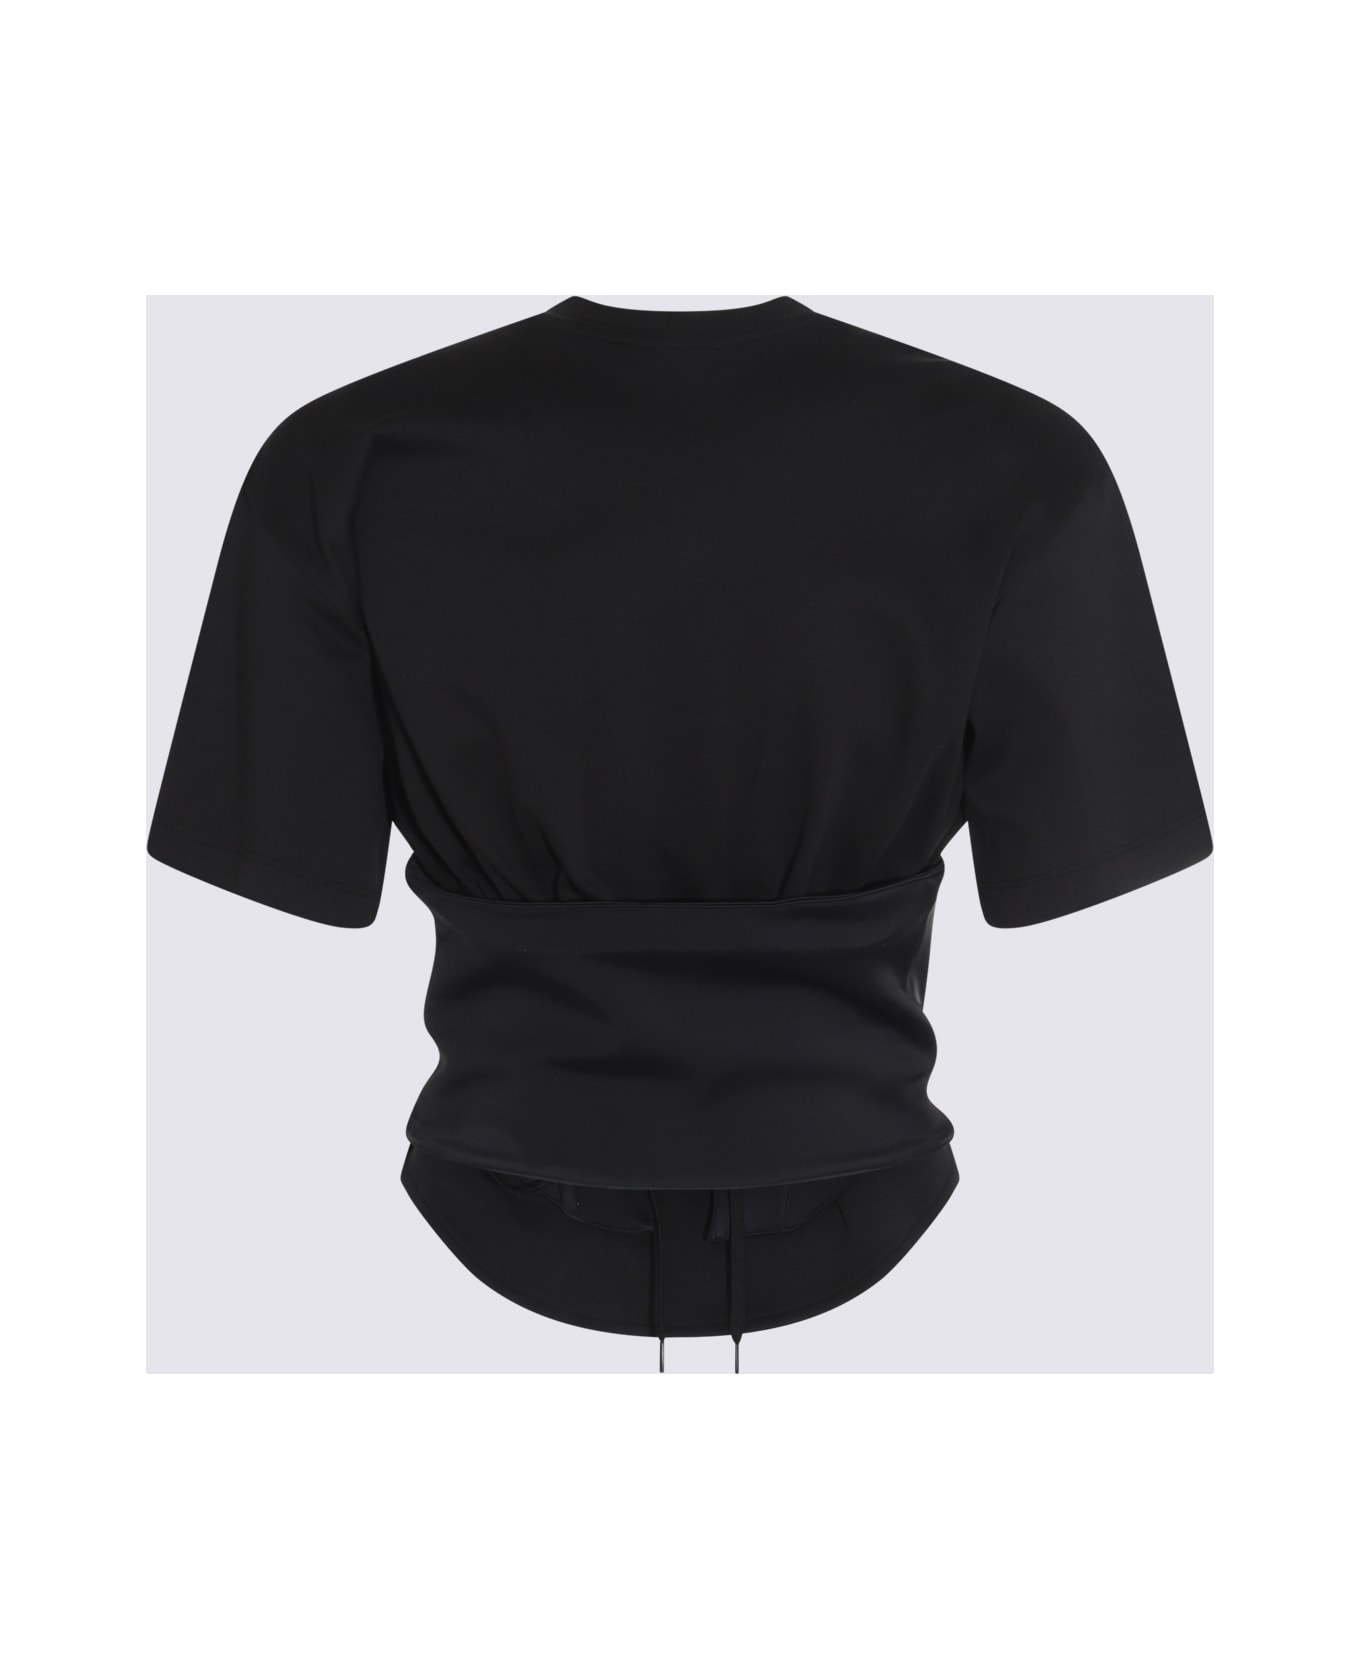 Mugler Black Cotton T-shirt - Black